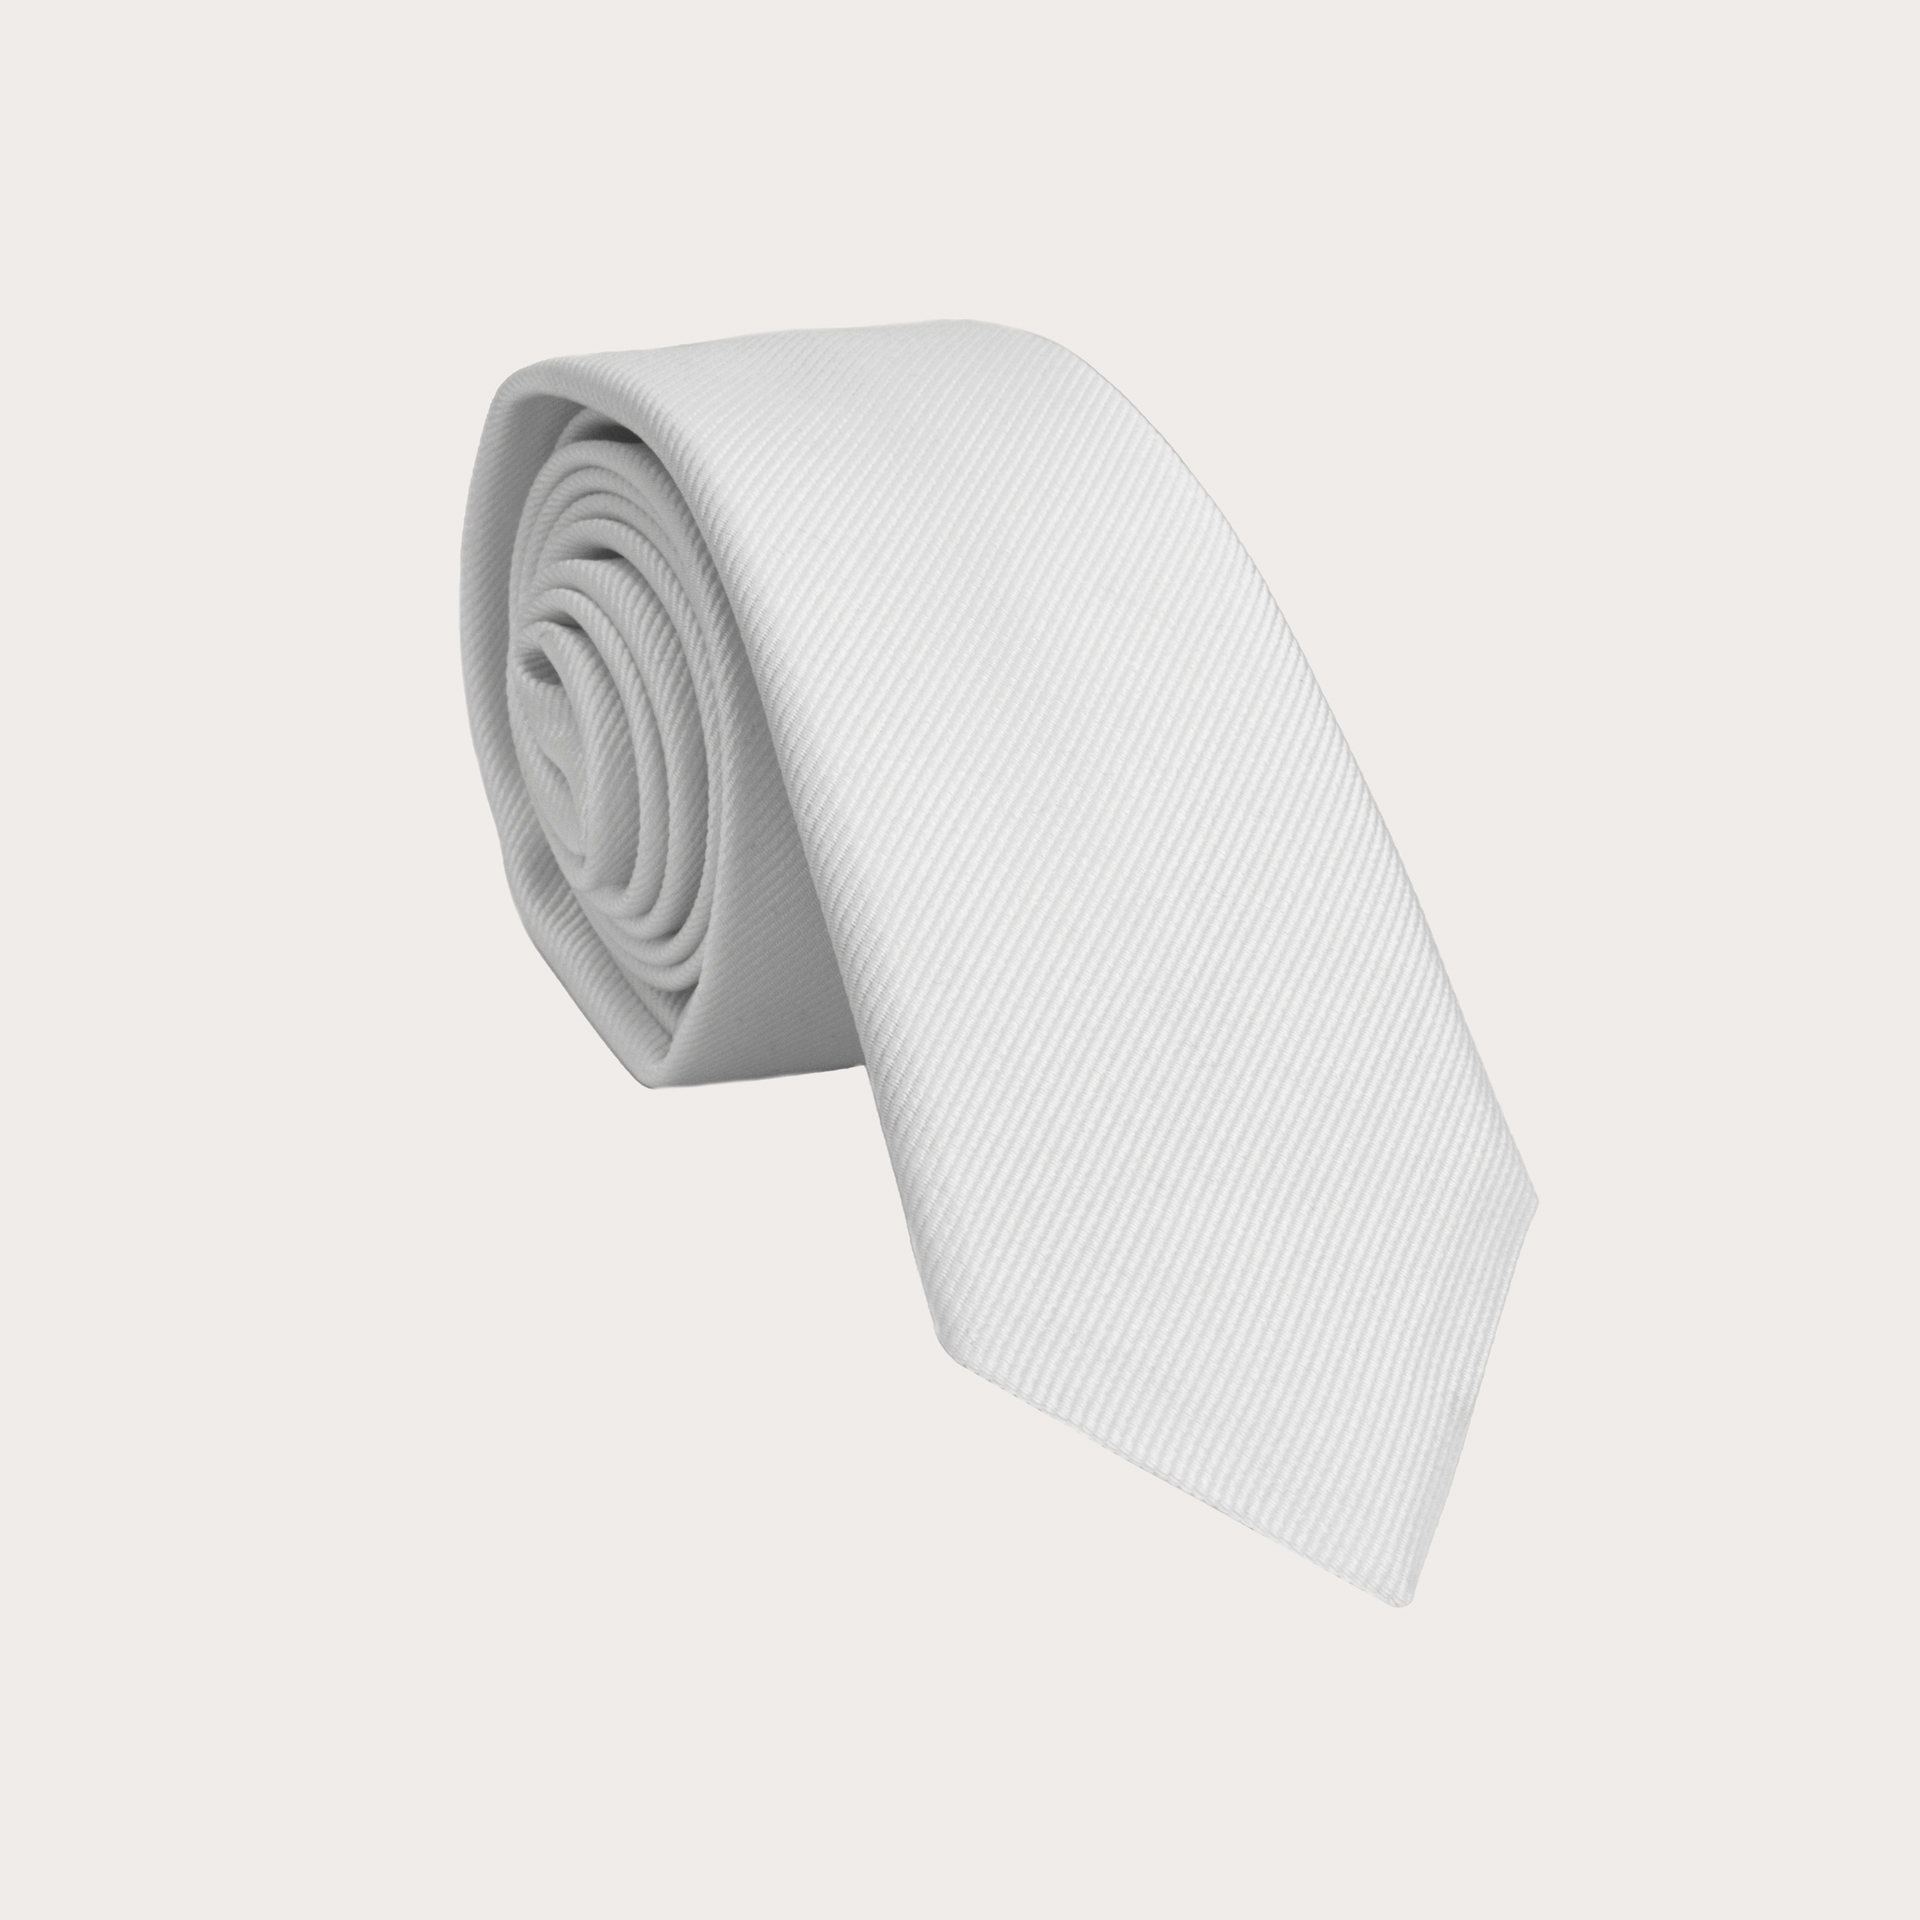 BRUCLE Ceremonial tie in white silk for children